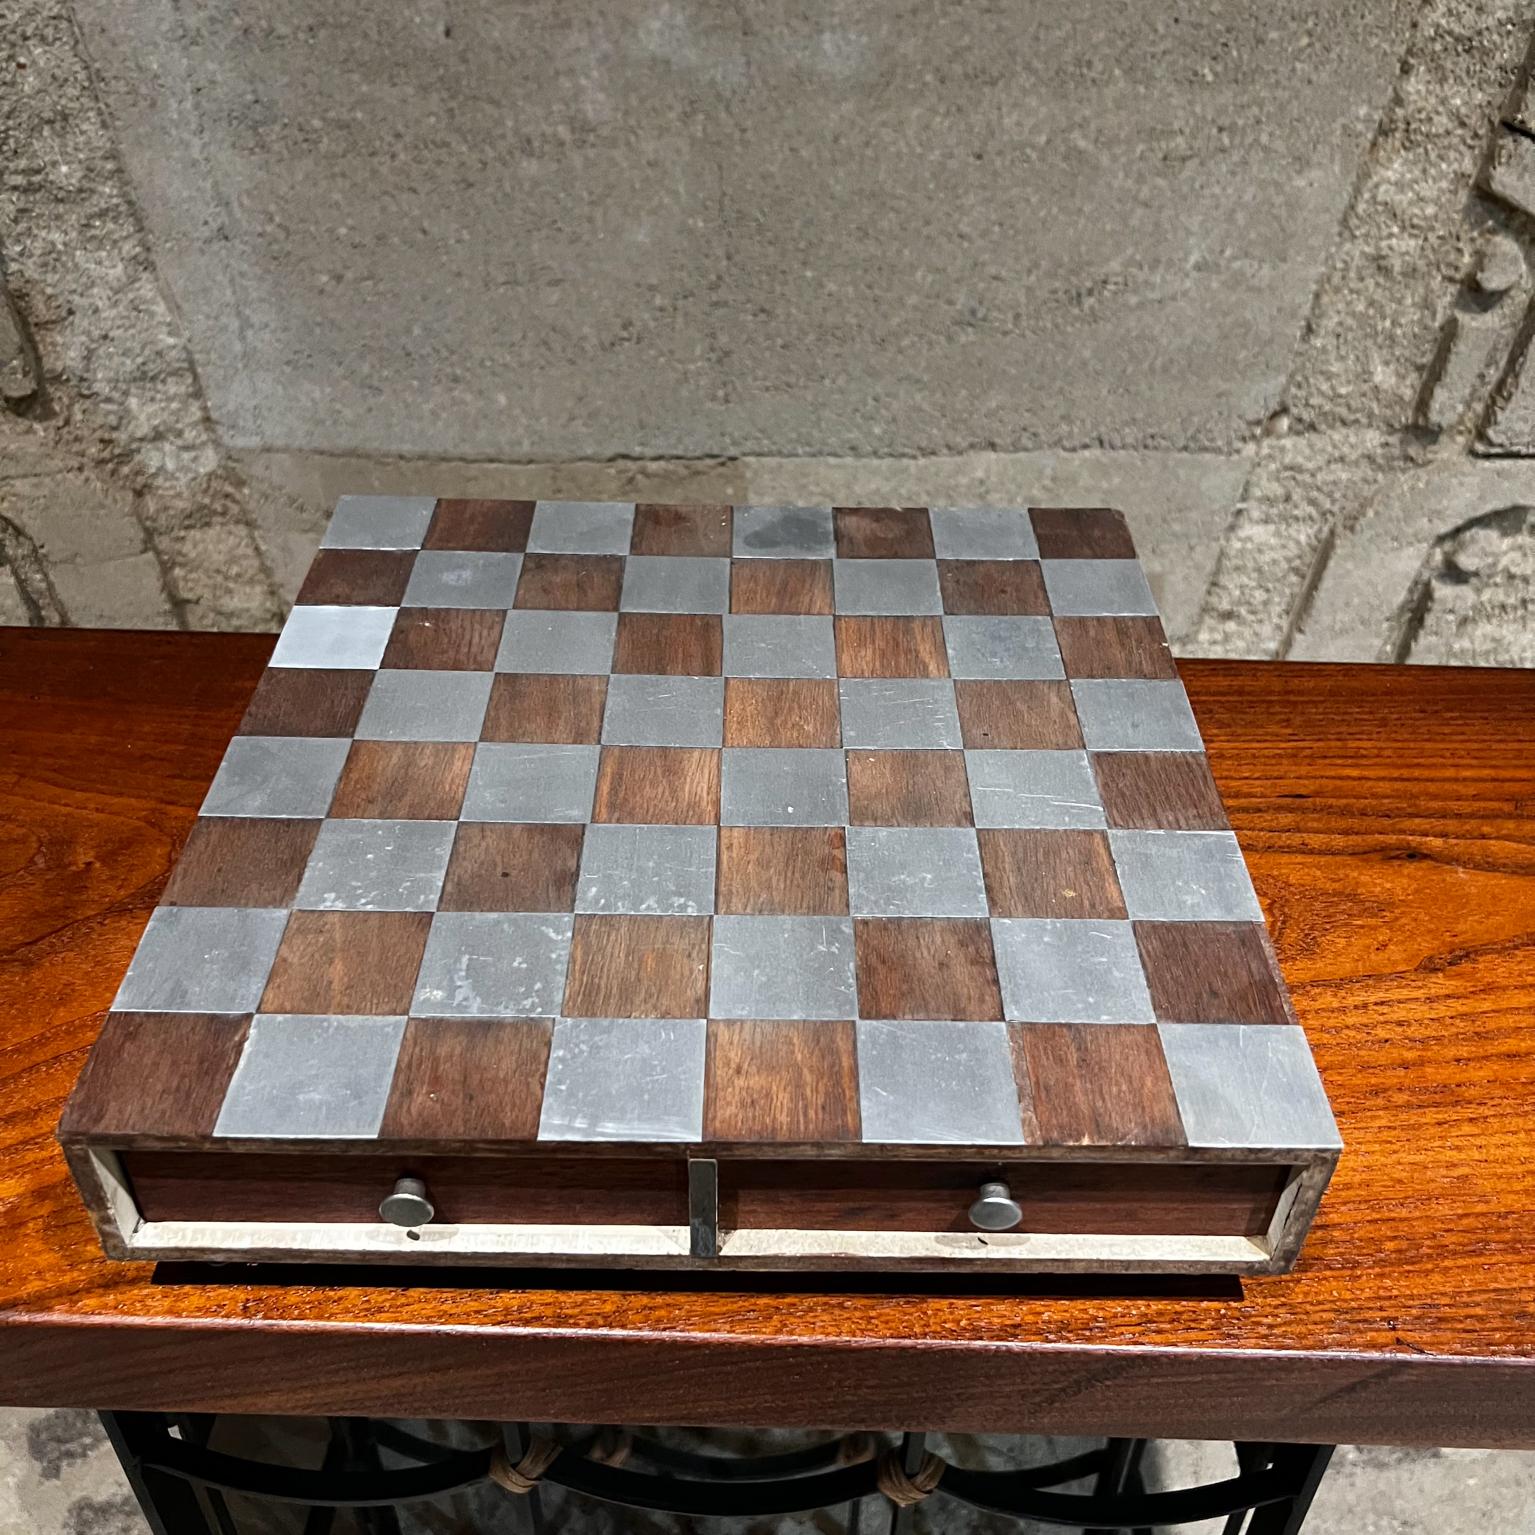 alcoa aluminum chess set